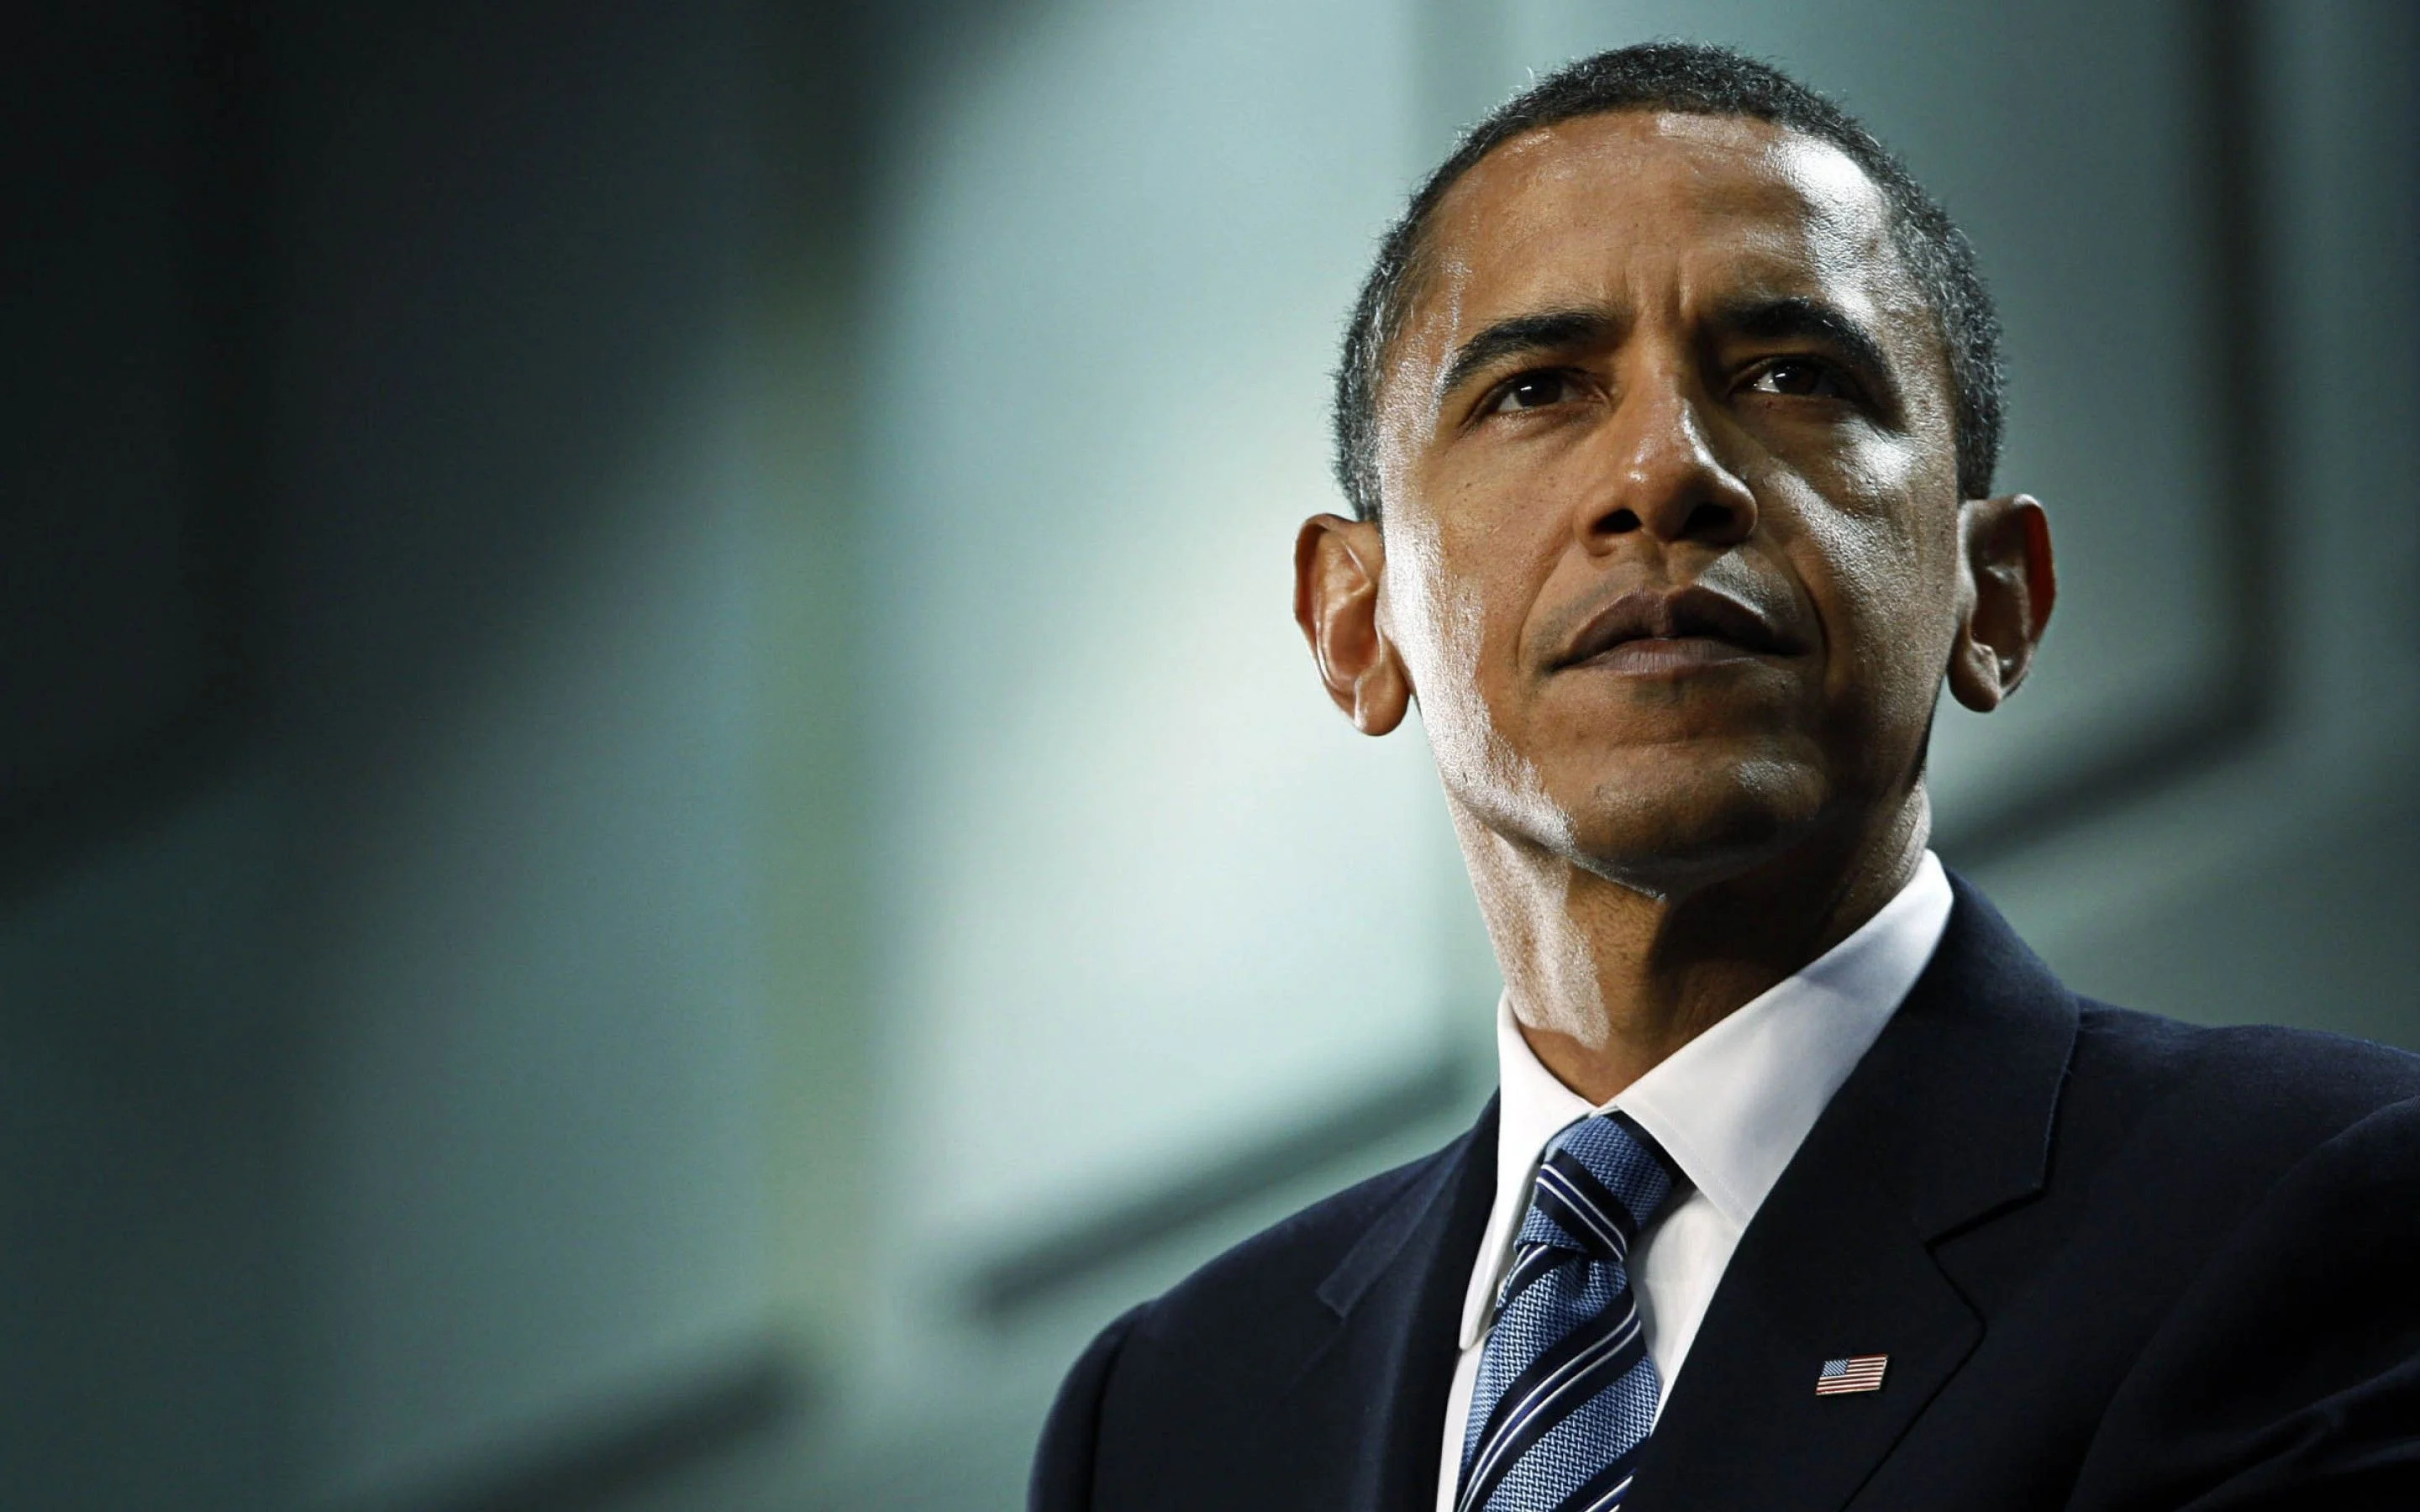 President Barack Obama wallpapers, Top backgrounds, High-quality images, 2880x1800 HD Desktop